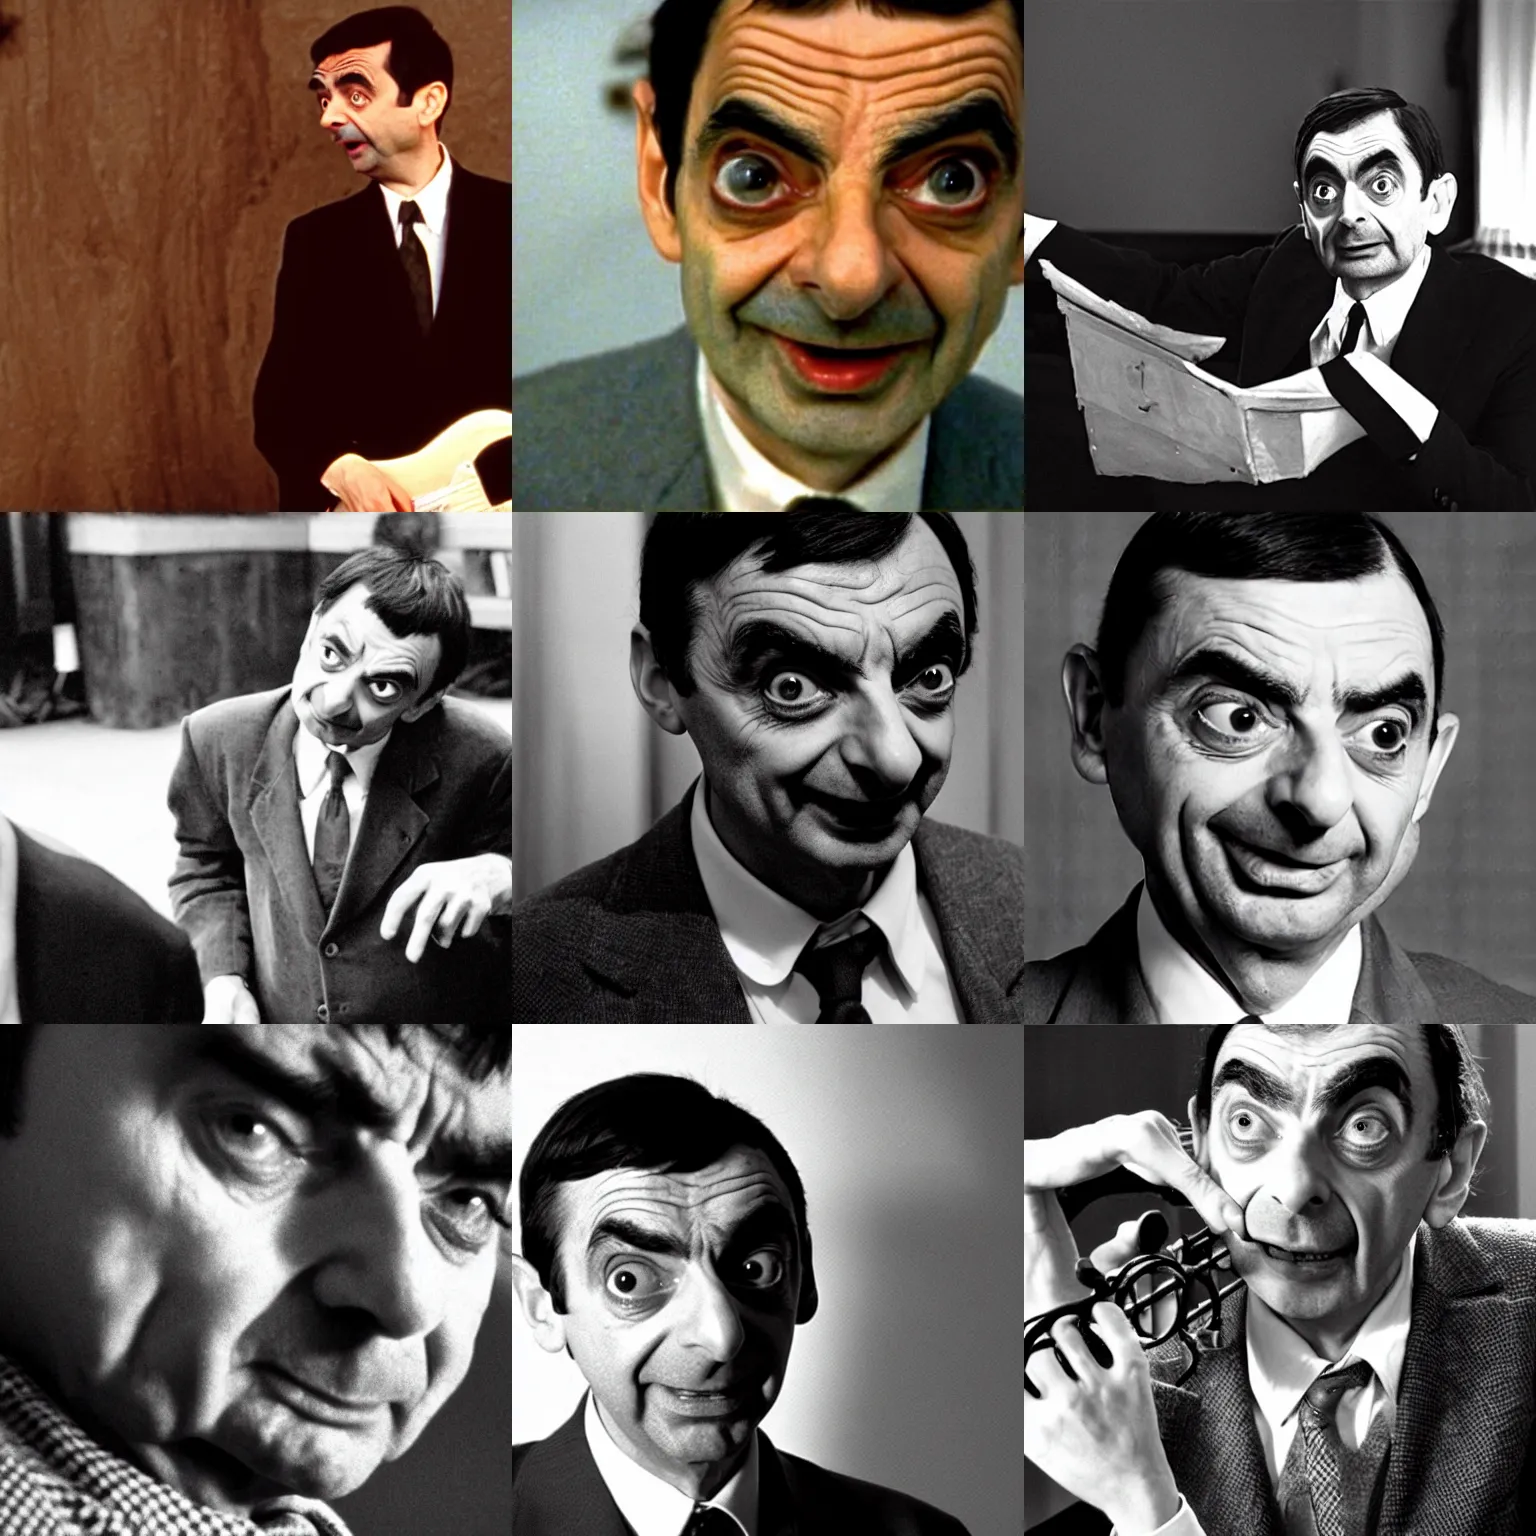 Prompt: A film still of Mr. Bean in the Bela Tarr film Werckmeister Harmonies